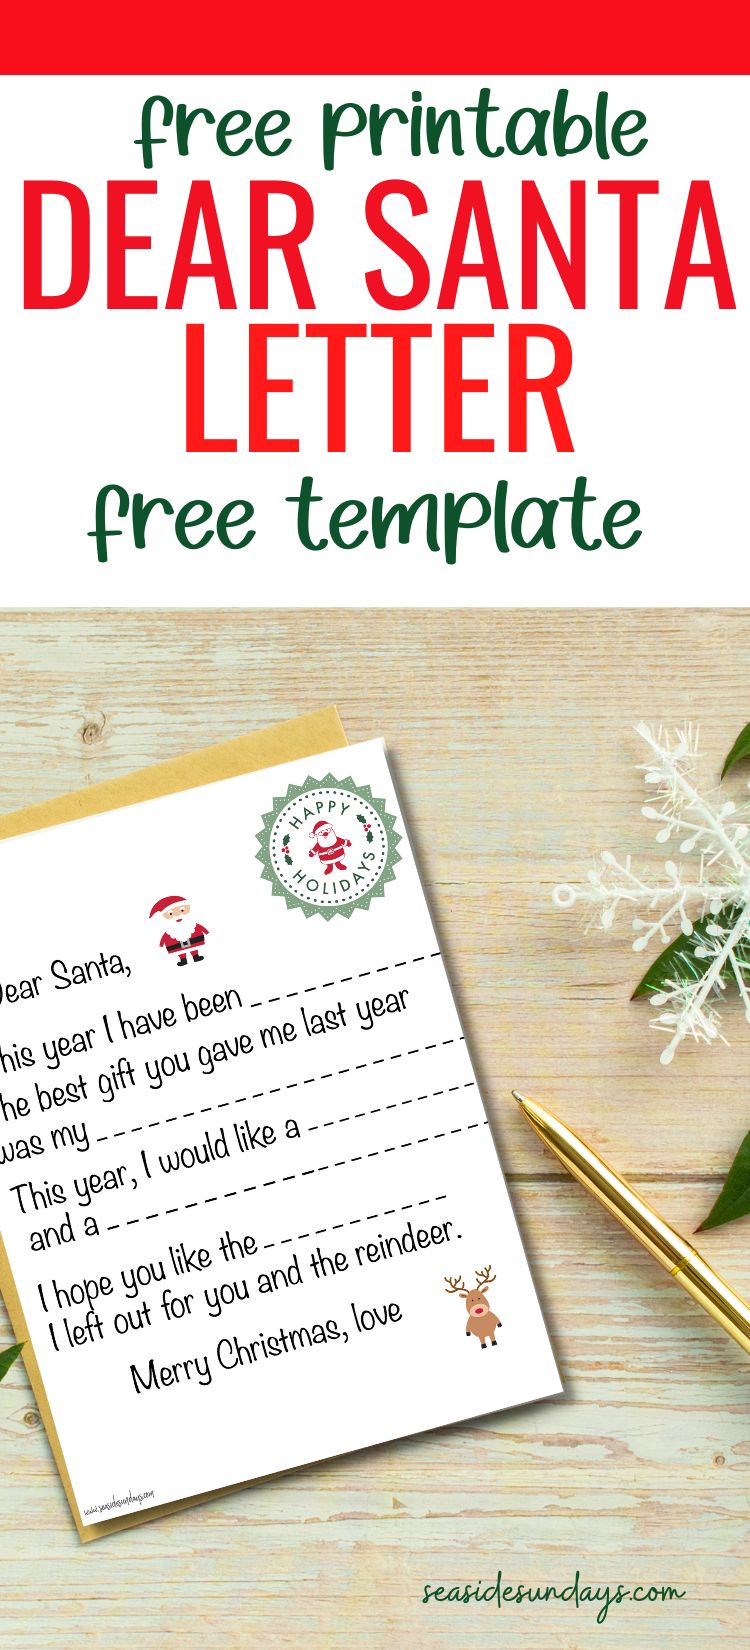 Dear Santa Letter - Free Printable Template